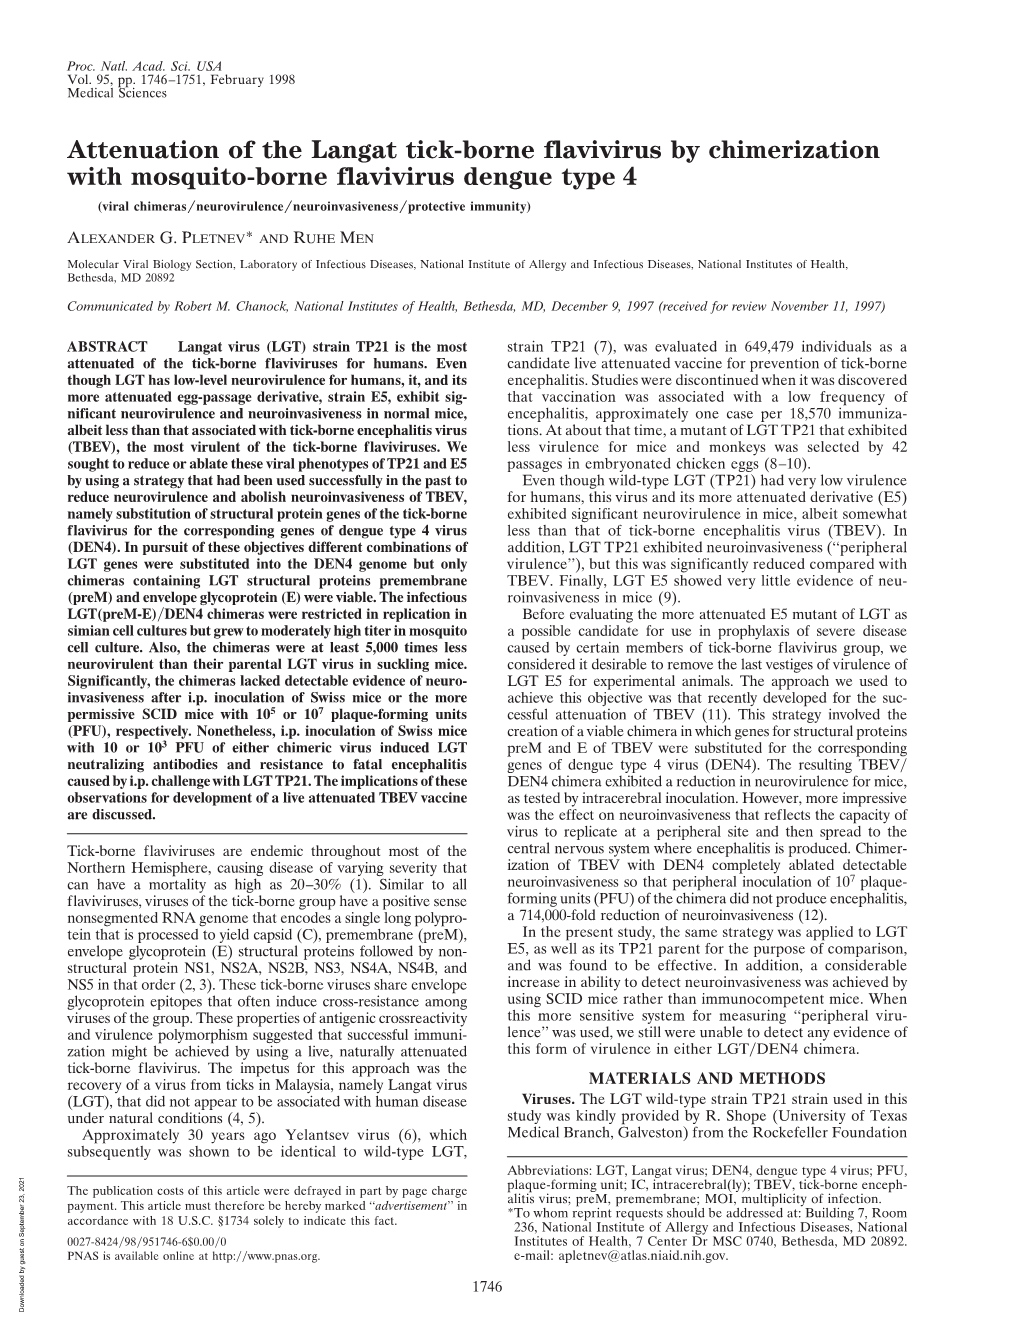 Attenuation of the Langat Tick-Borne Flavivirus by Chimerization with Mosquito-Borne Flavivirus Dengue Type 4